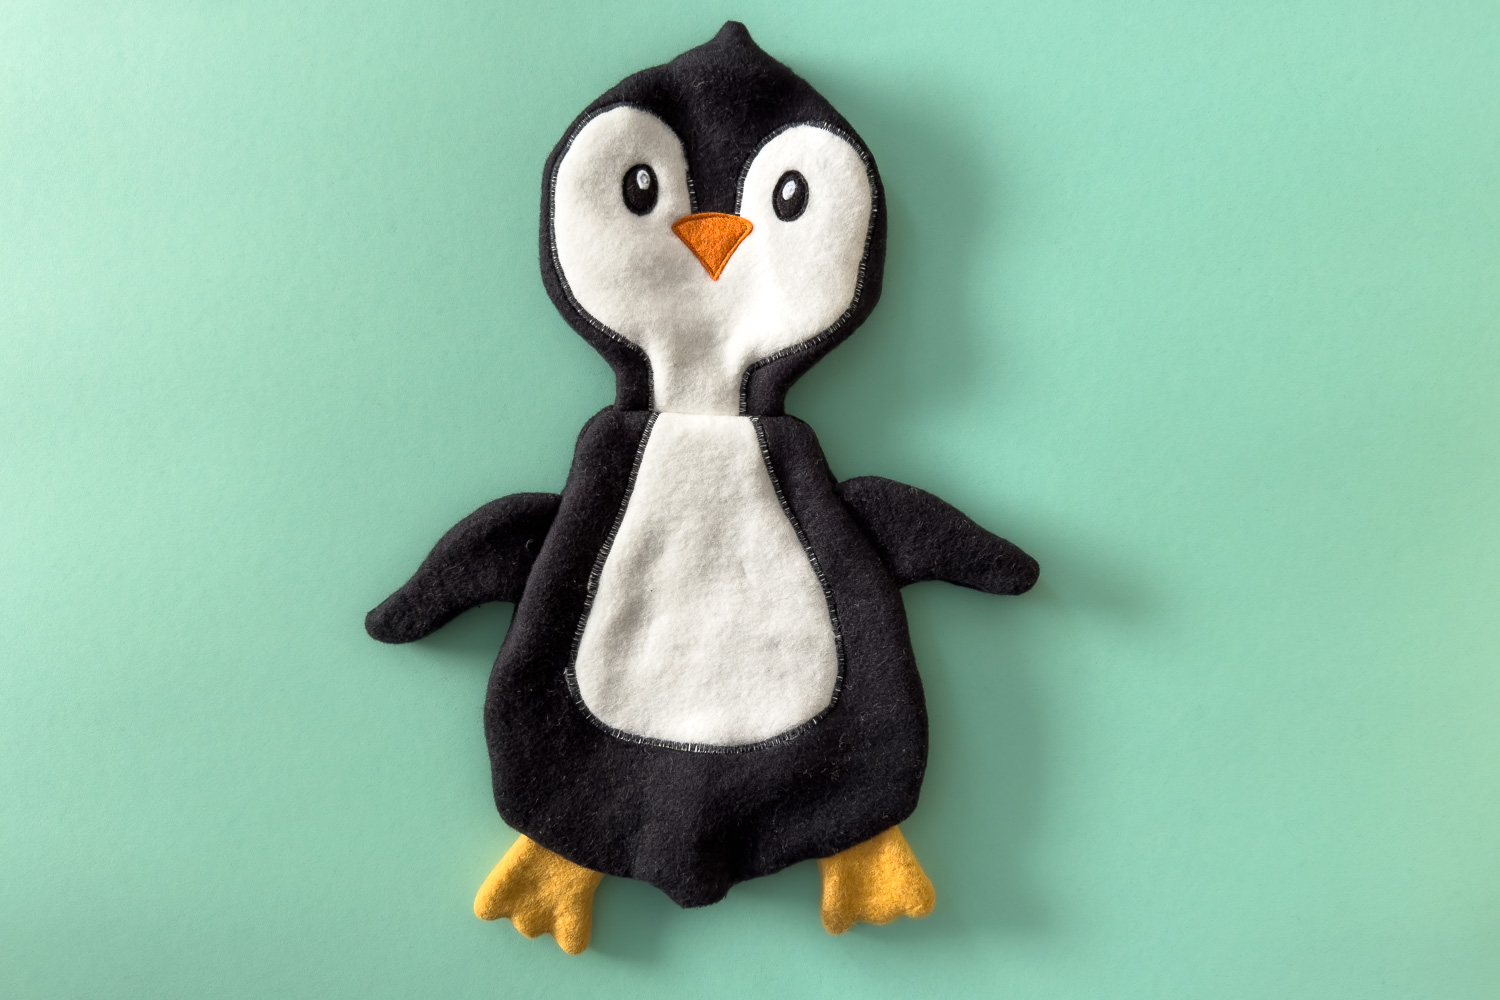 Pinguin Schnuffeltuch – kostenloses Schnittmuster